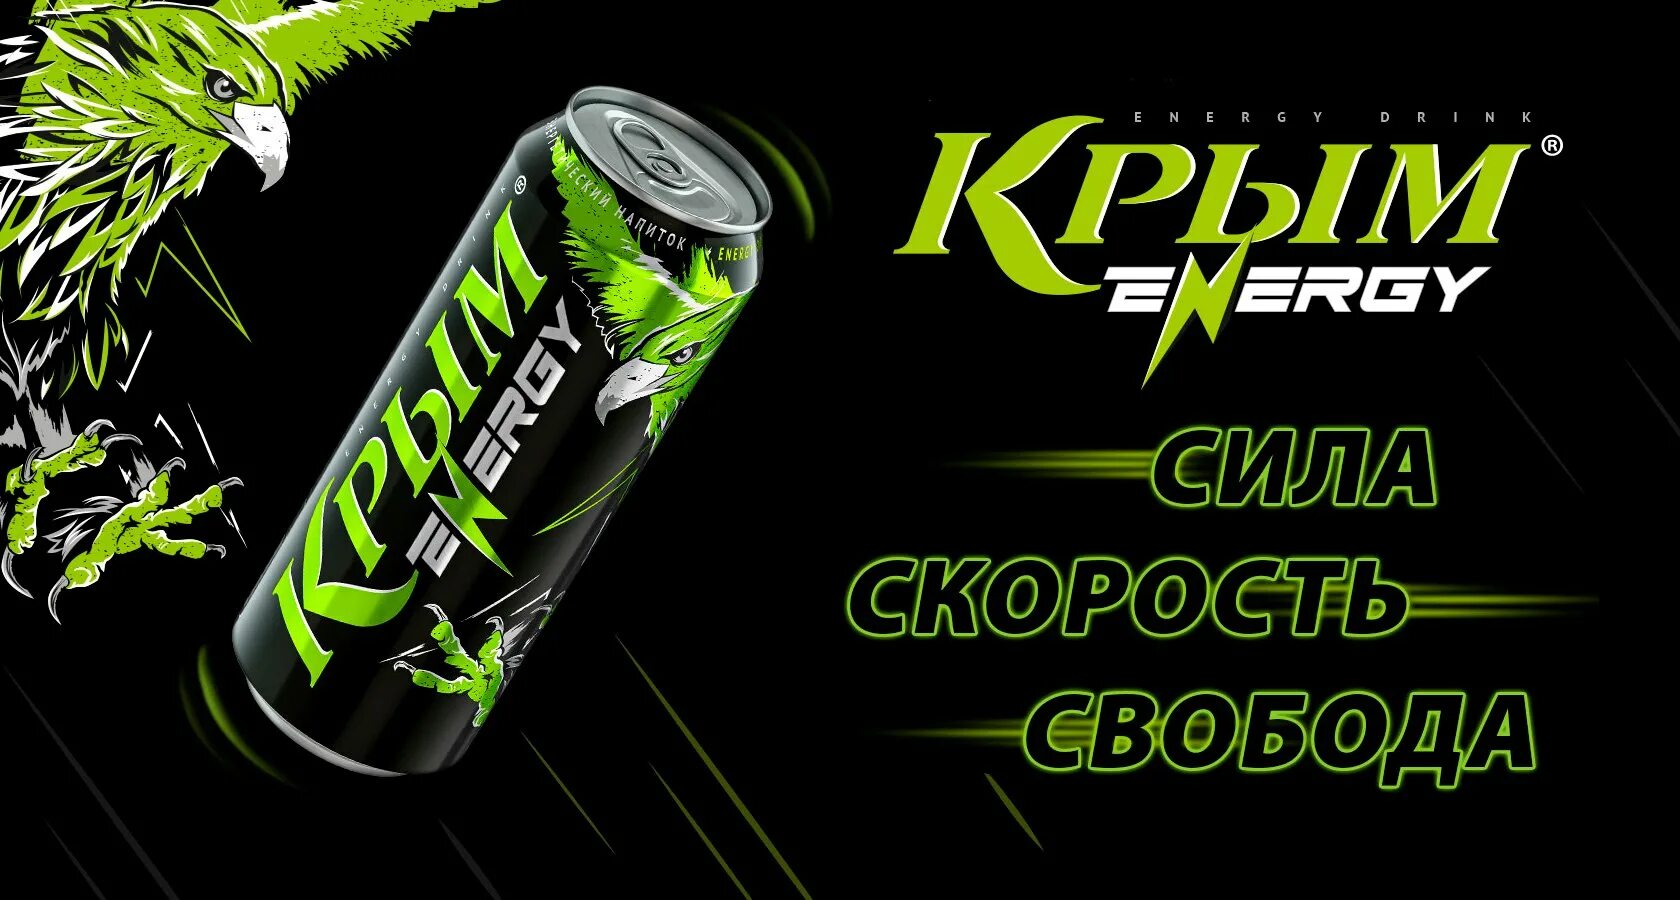 Энергетический напиток Крым Energy. Энерджи Энергетик напиток. Энергетик Monster Energy. Энергия напиток Monster Energy.